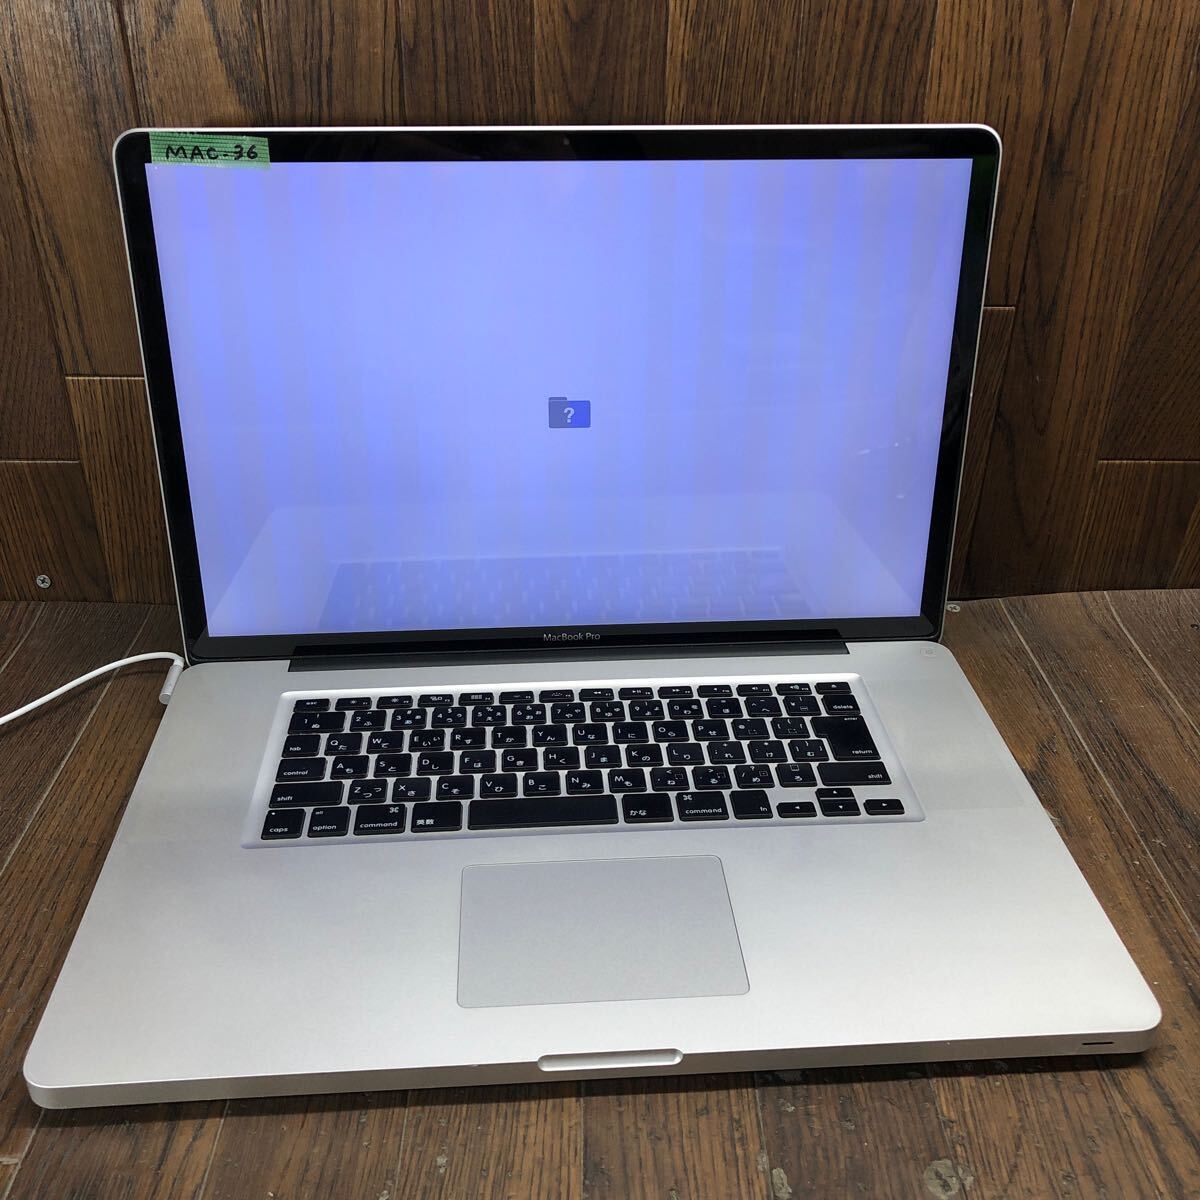 MAC-36 激安 MacBook Pro 17-inch Model：A1297 起動確認済み メモリ